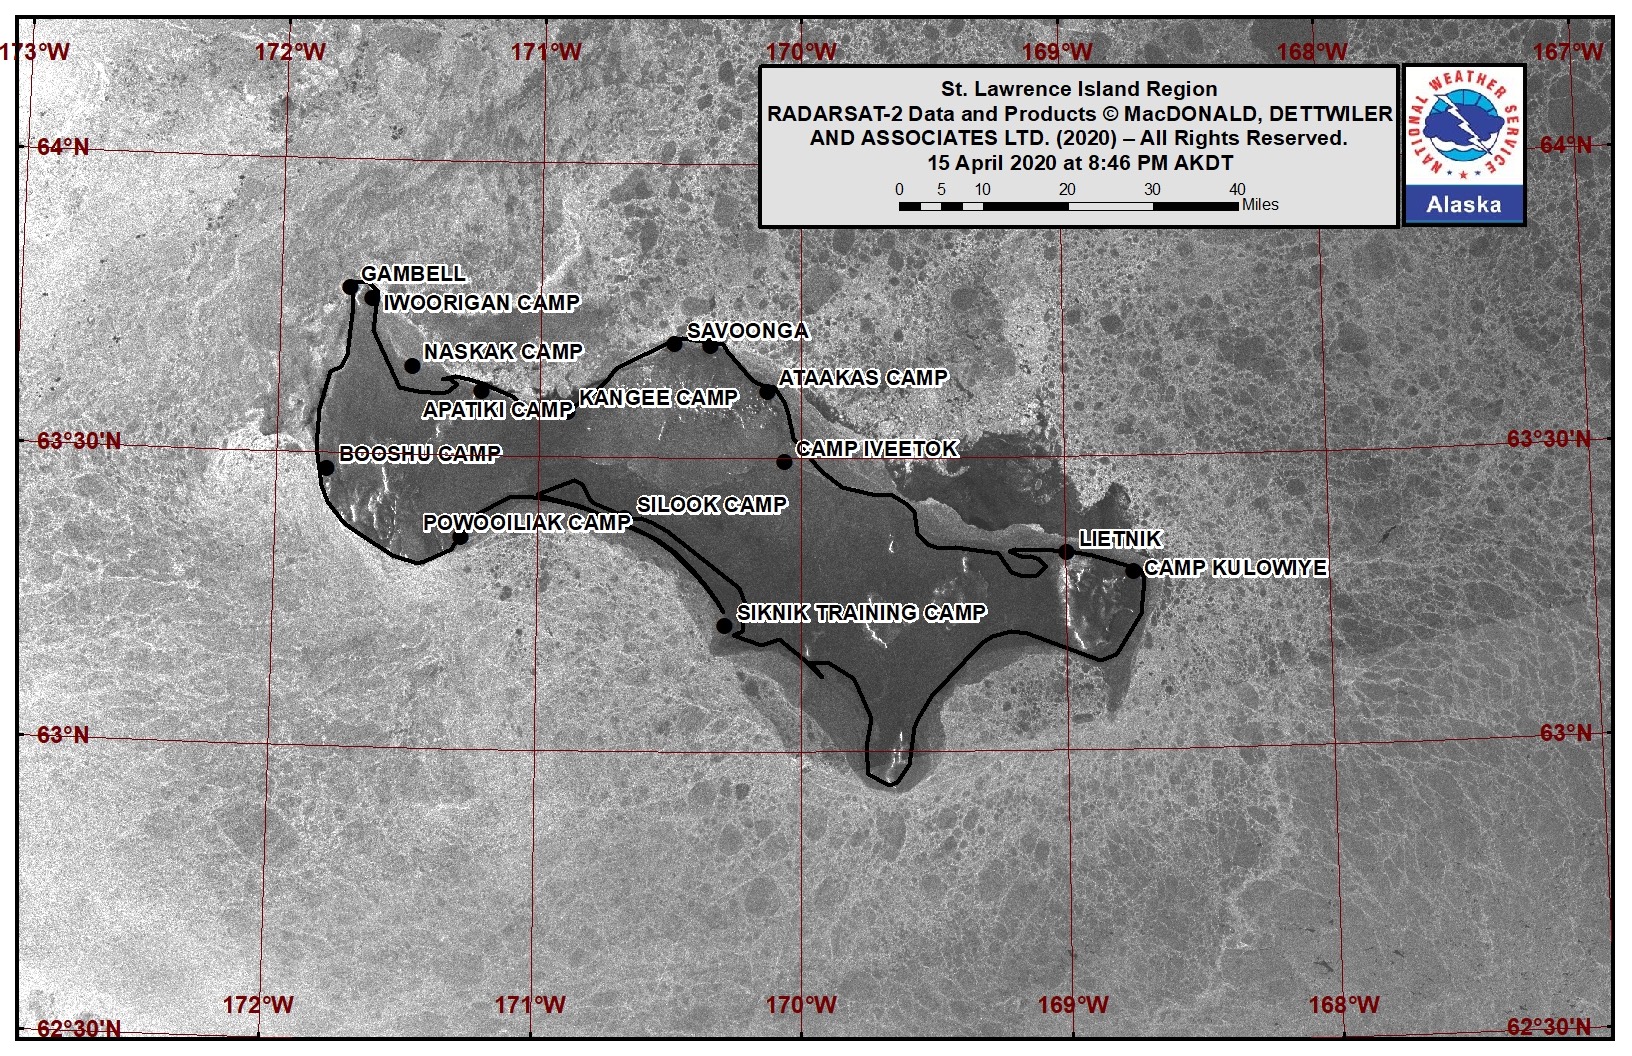 St. Lawrence Island satellite image